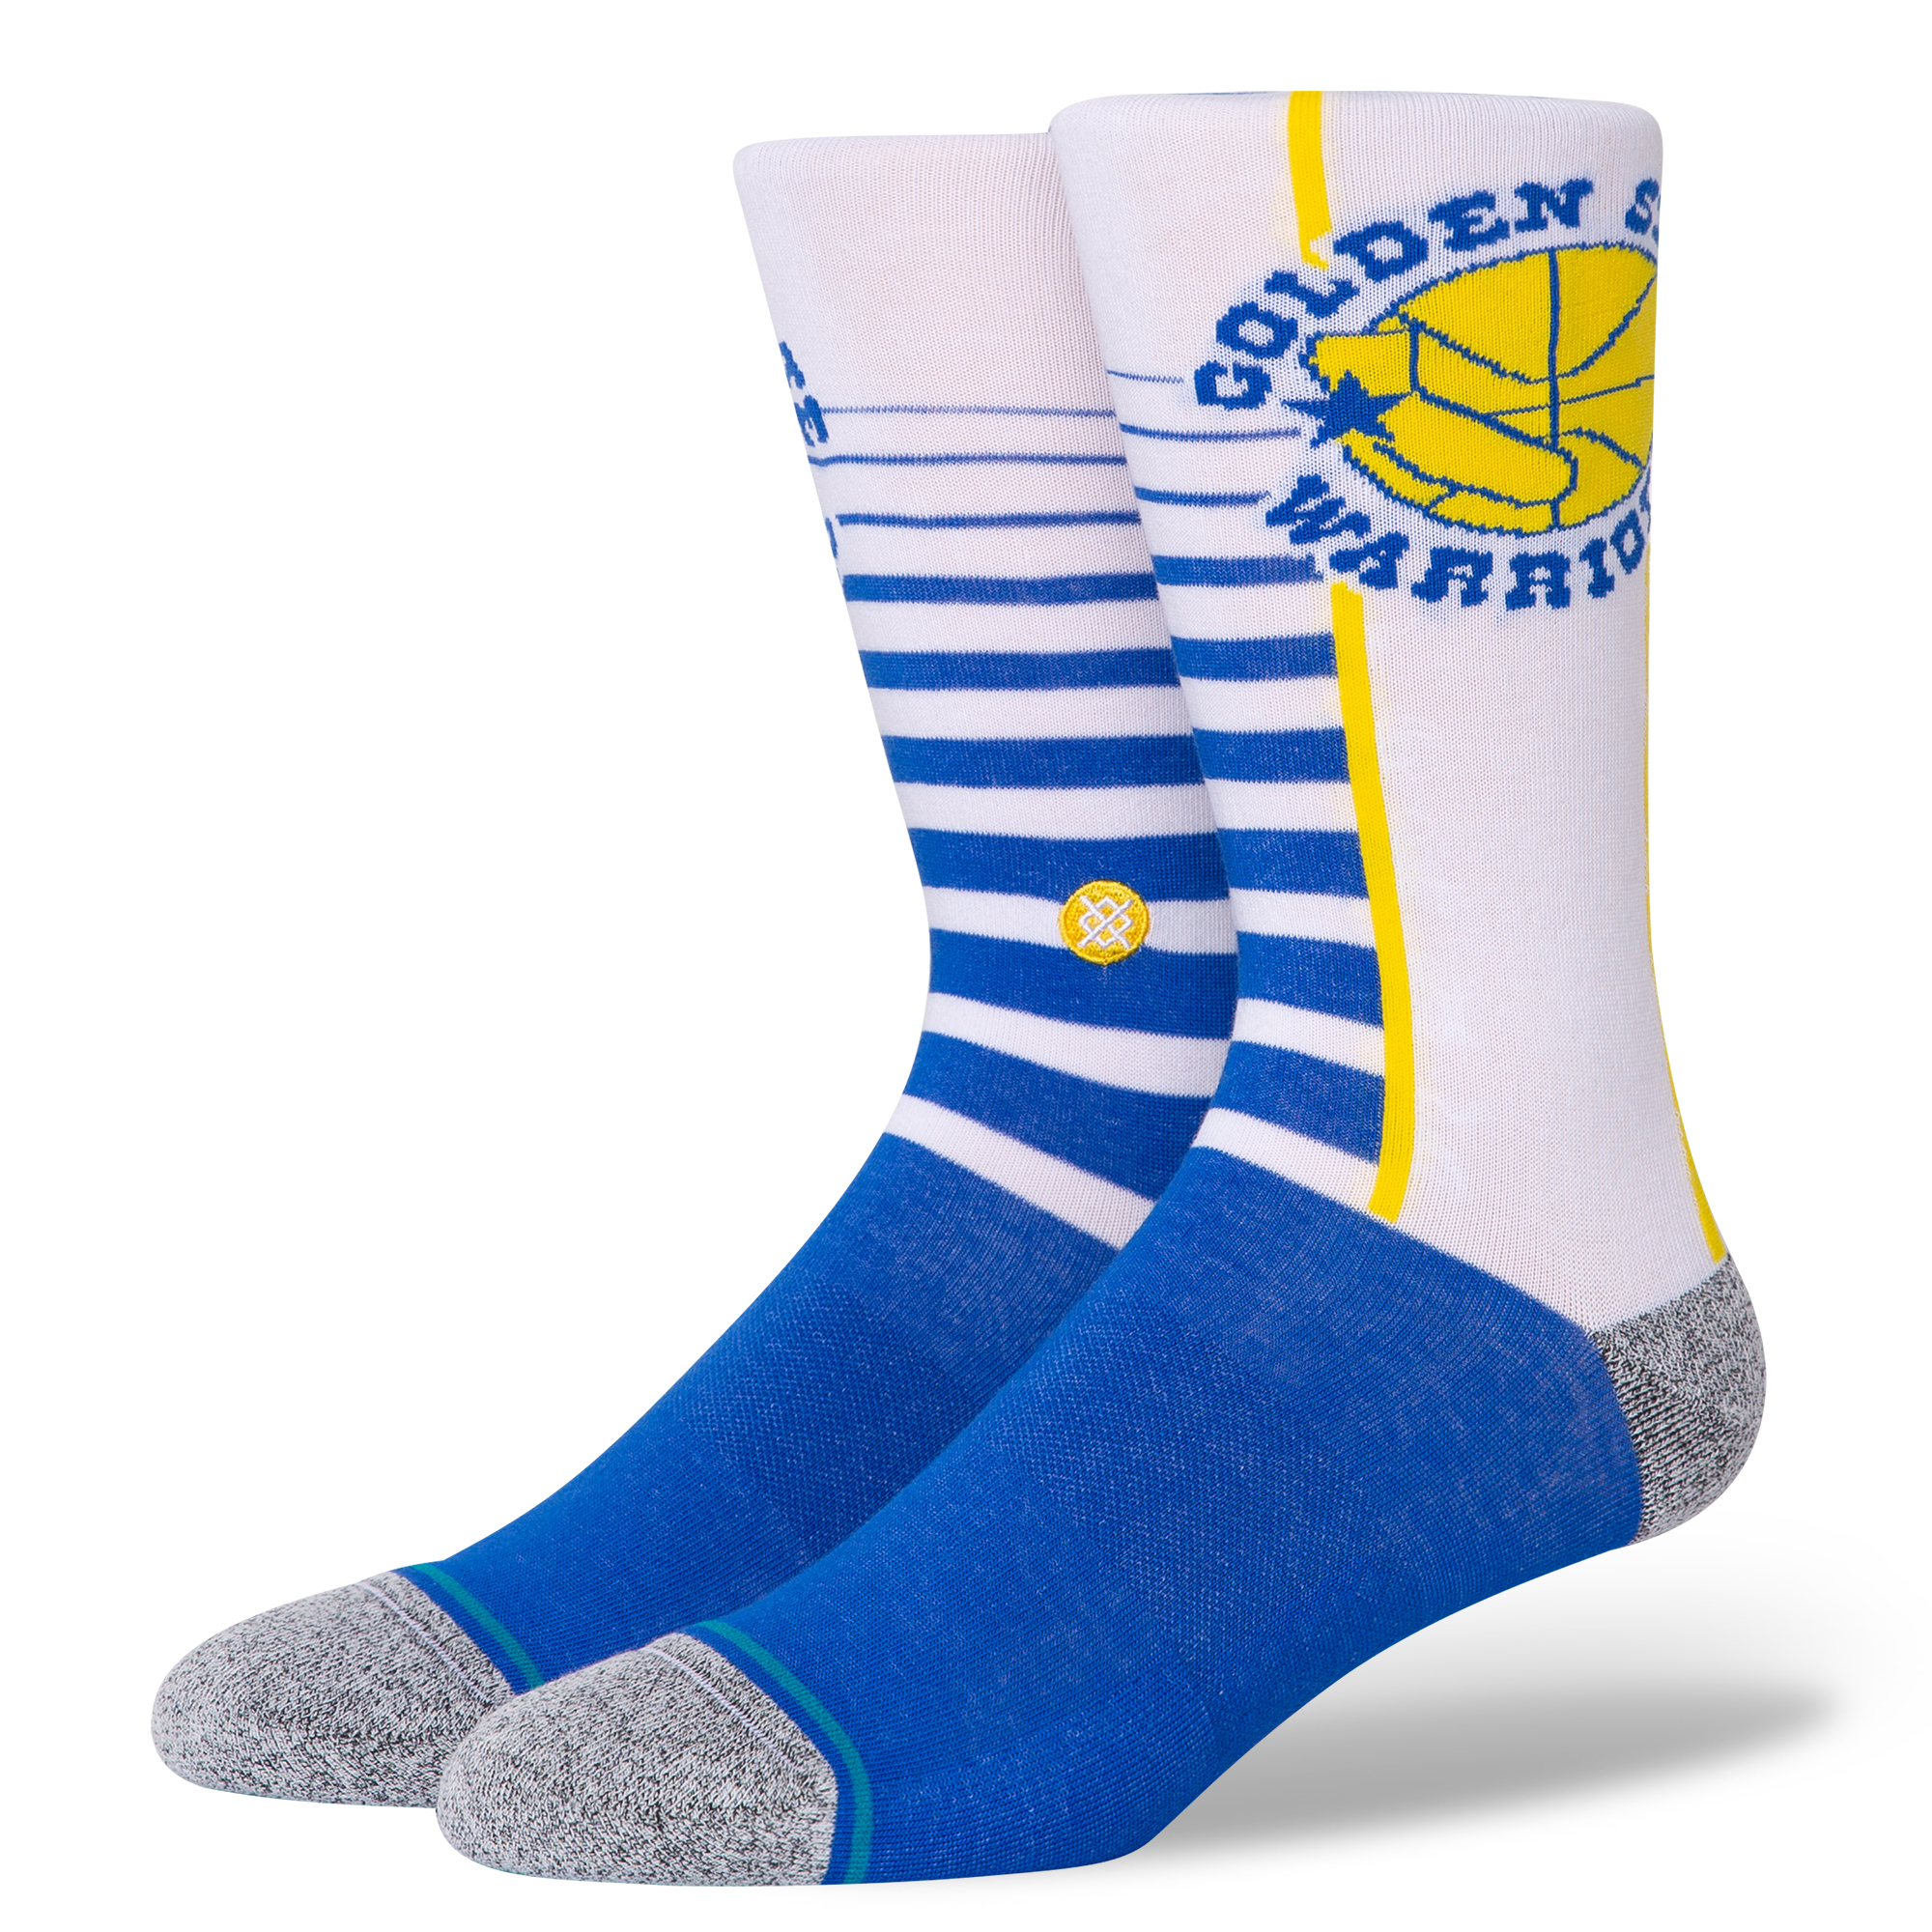 Nba Golden State Warriors Large Crew Socks : Target